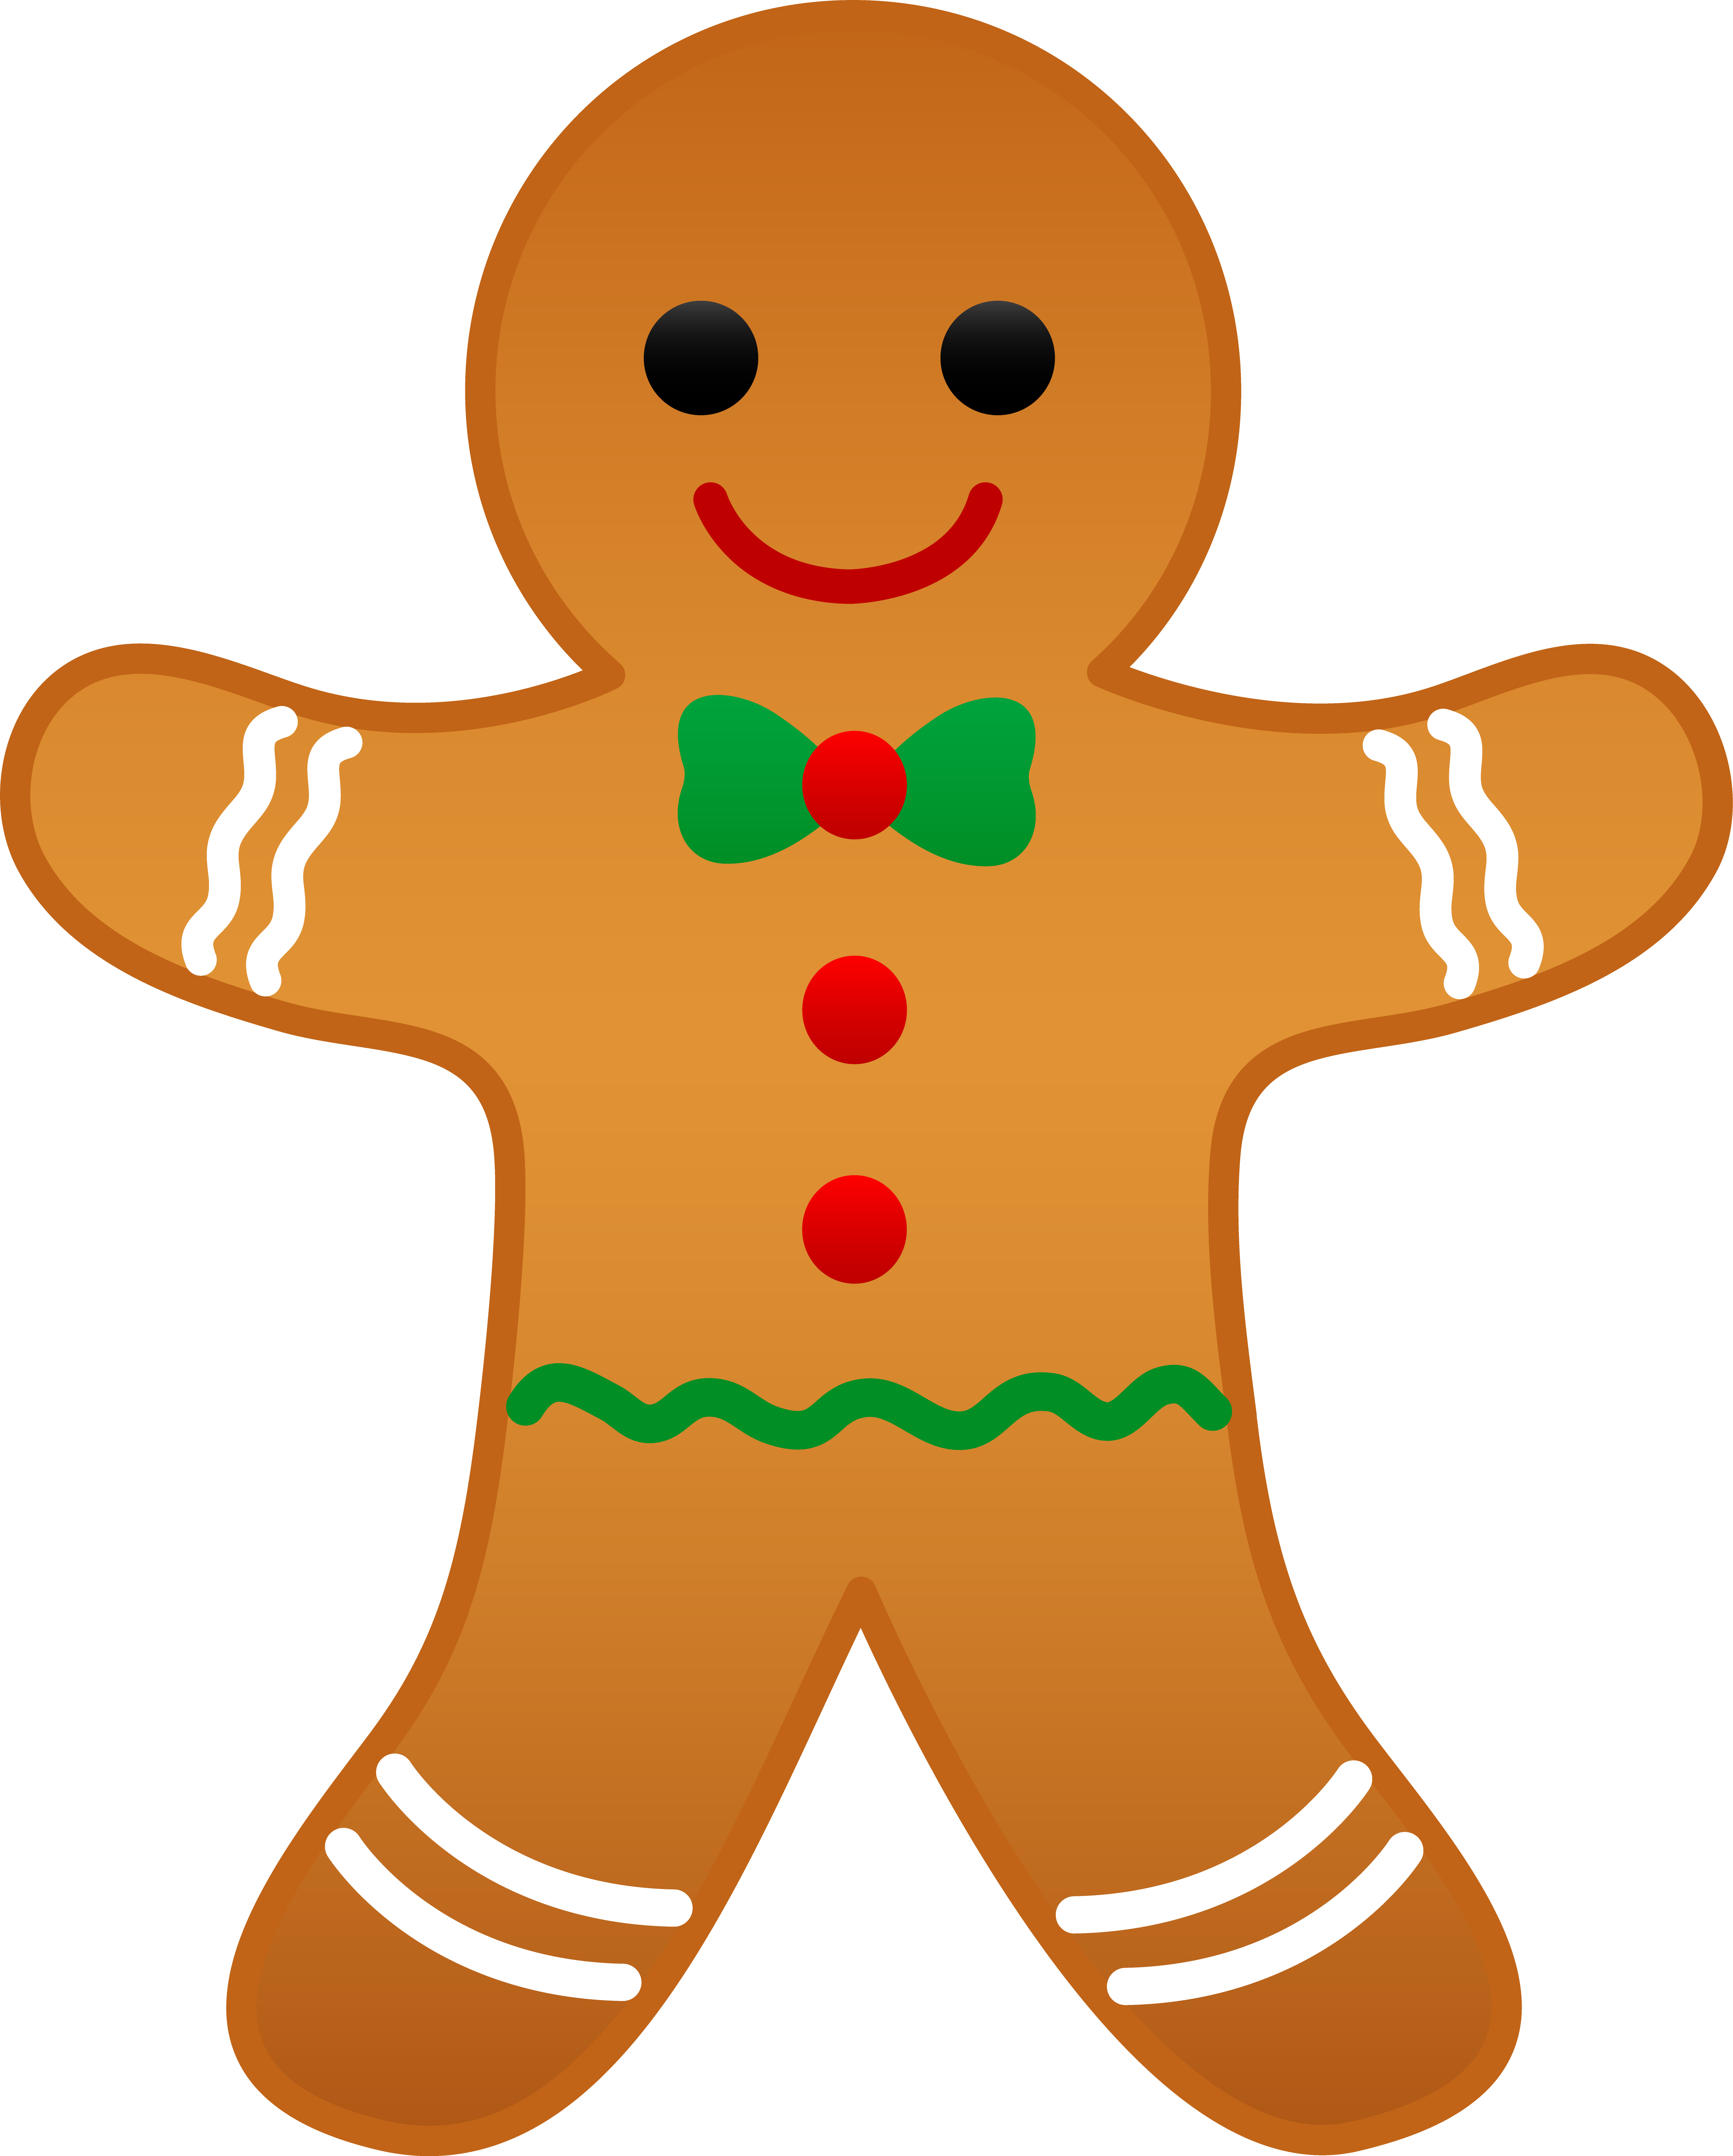 Cookies Clip Artchristmas Gingerbread Man   Free Clip Art Bpr3sjis Png